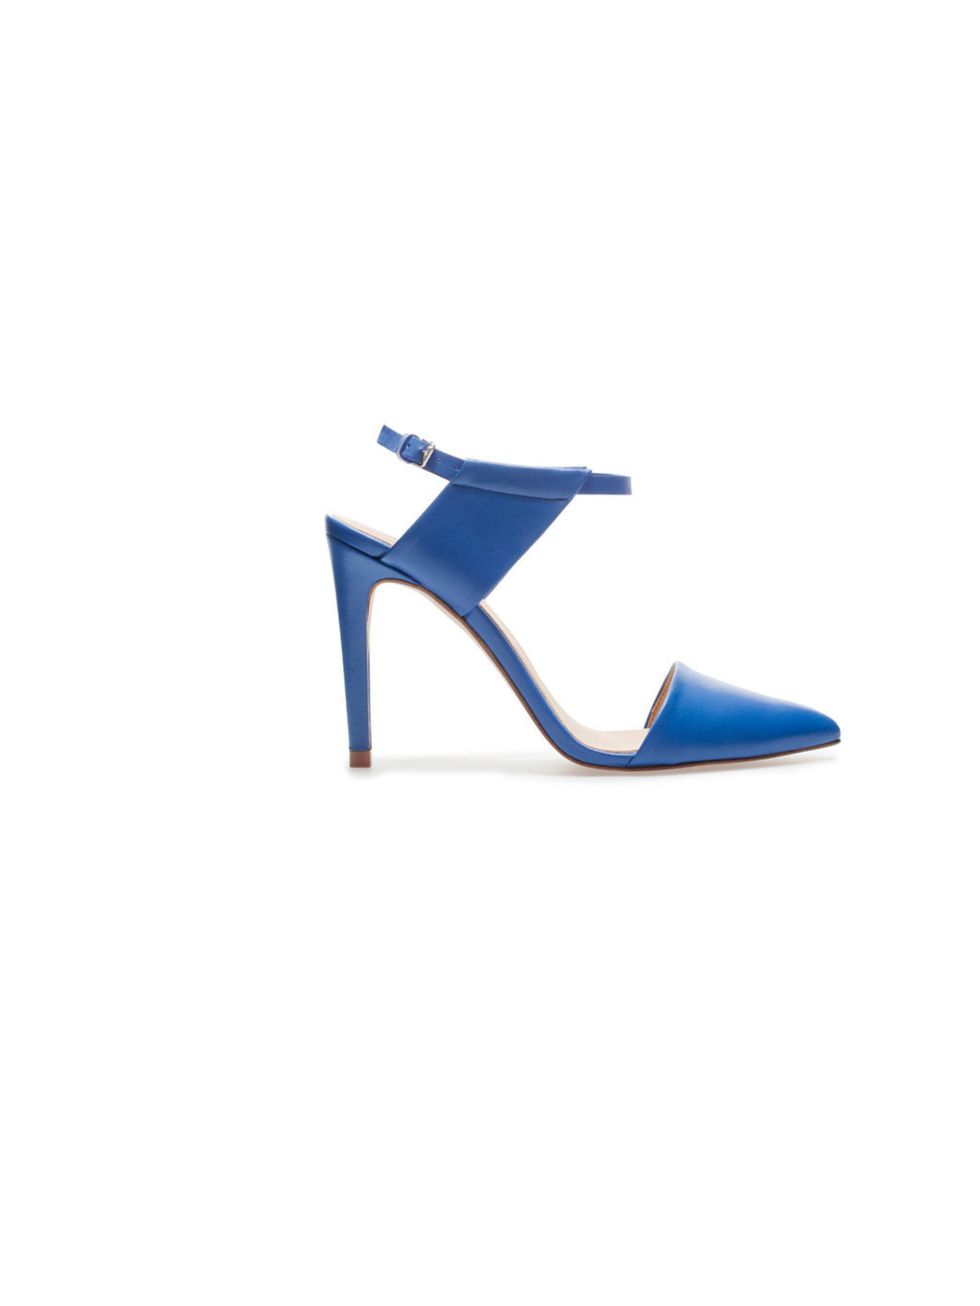 <p>Shoe, £55, from <a href="http://www.zara.com">Zara</a></p>